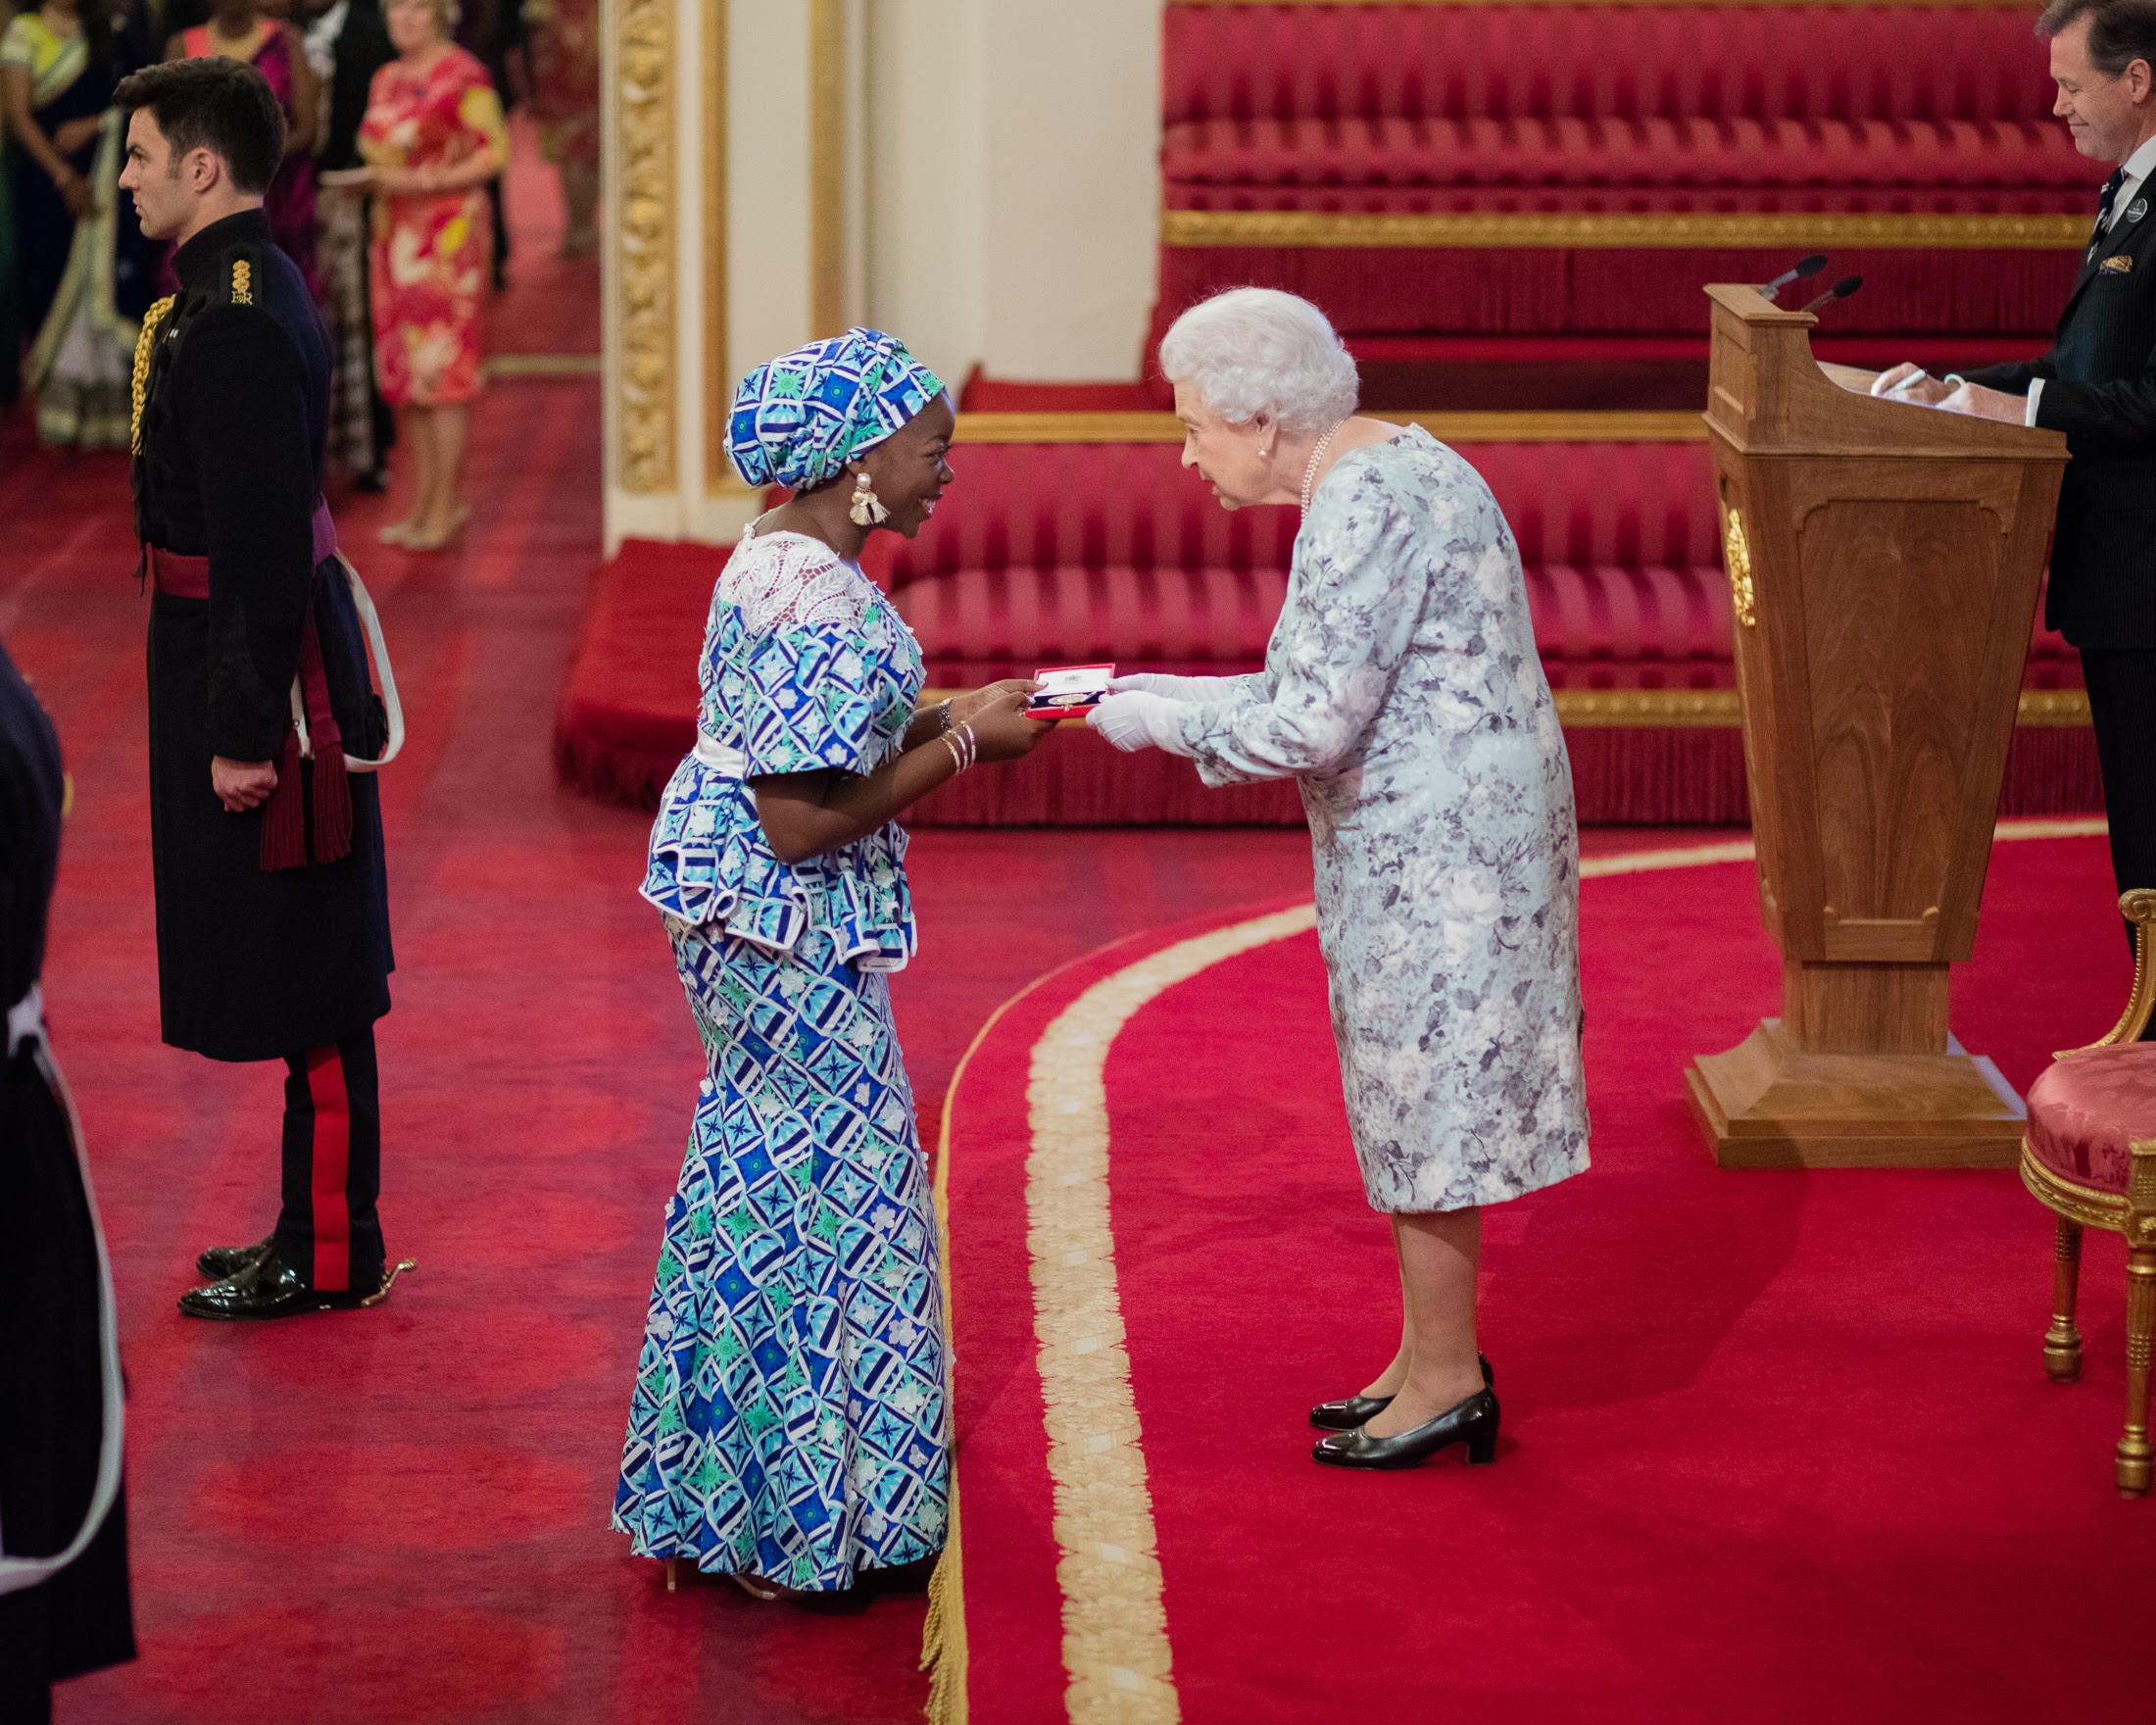 Bukola Bolarinwa 2017 Queen's Young Leader from Nigeria